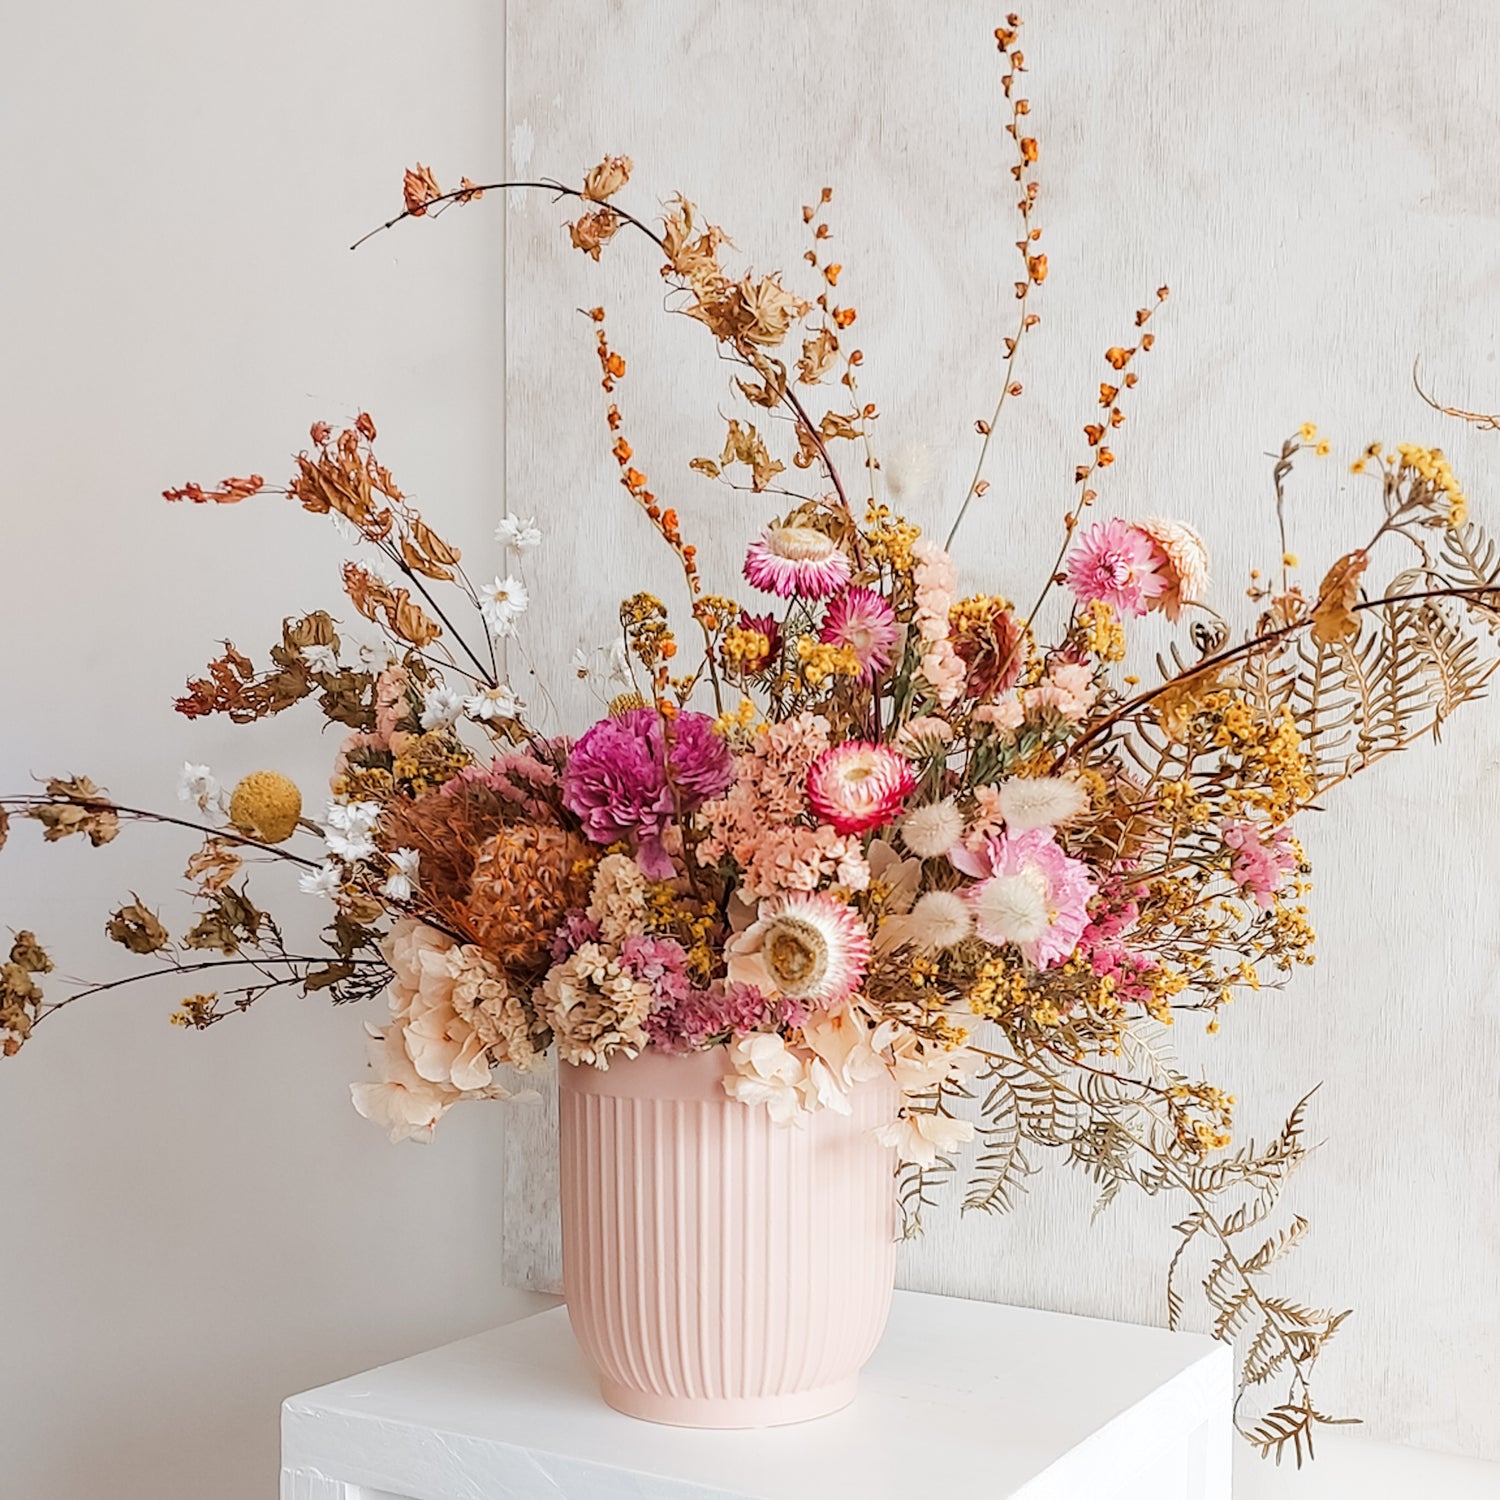 Dried flower vase arrangement in bright colourful tones.